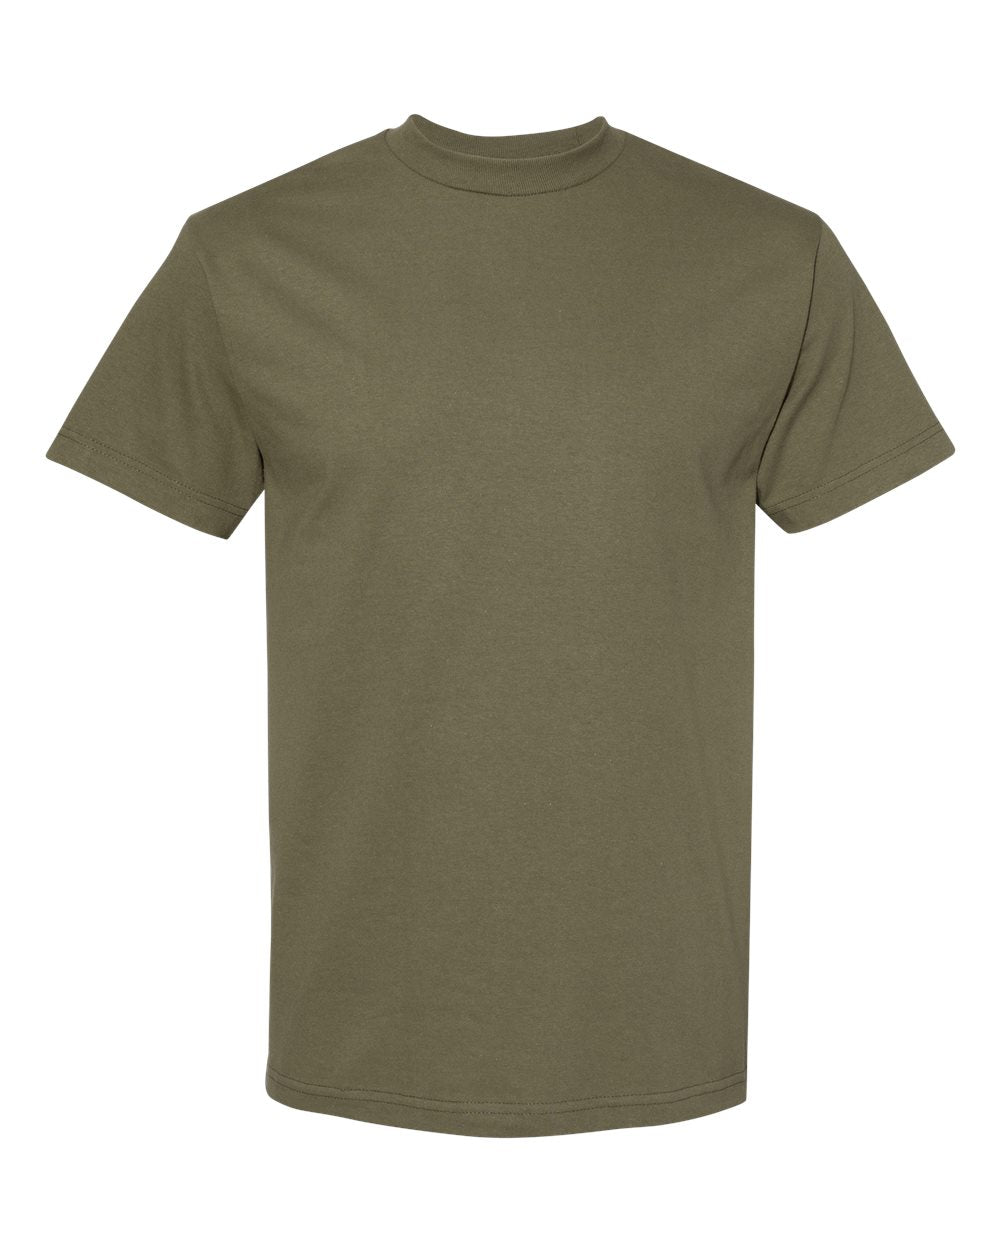 American Apparel / Heavyweight Cotton Unisex T-Shirt